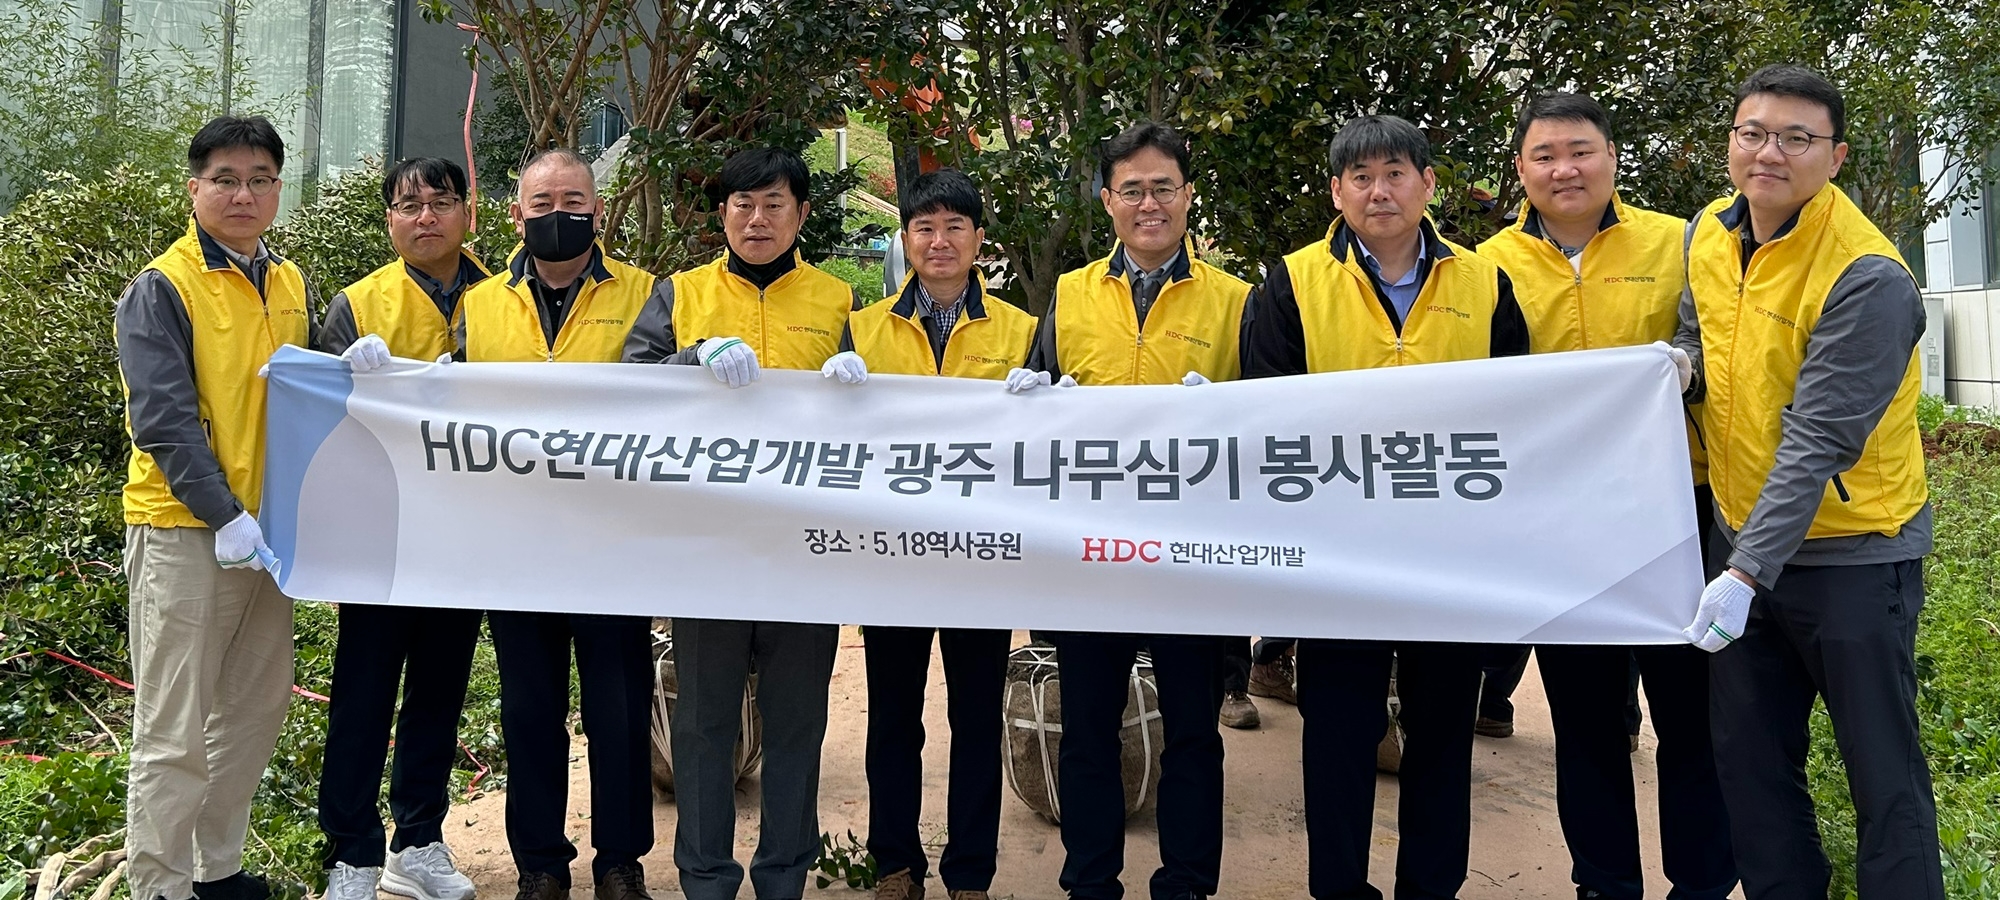 HDC현대산업개발은 8일 5.18역사공원 환경 개선을 위해 공원 입구에 나무심기 봉사활동을 진행했다.(사진=HDC현대산업개발)